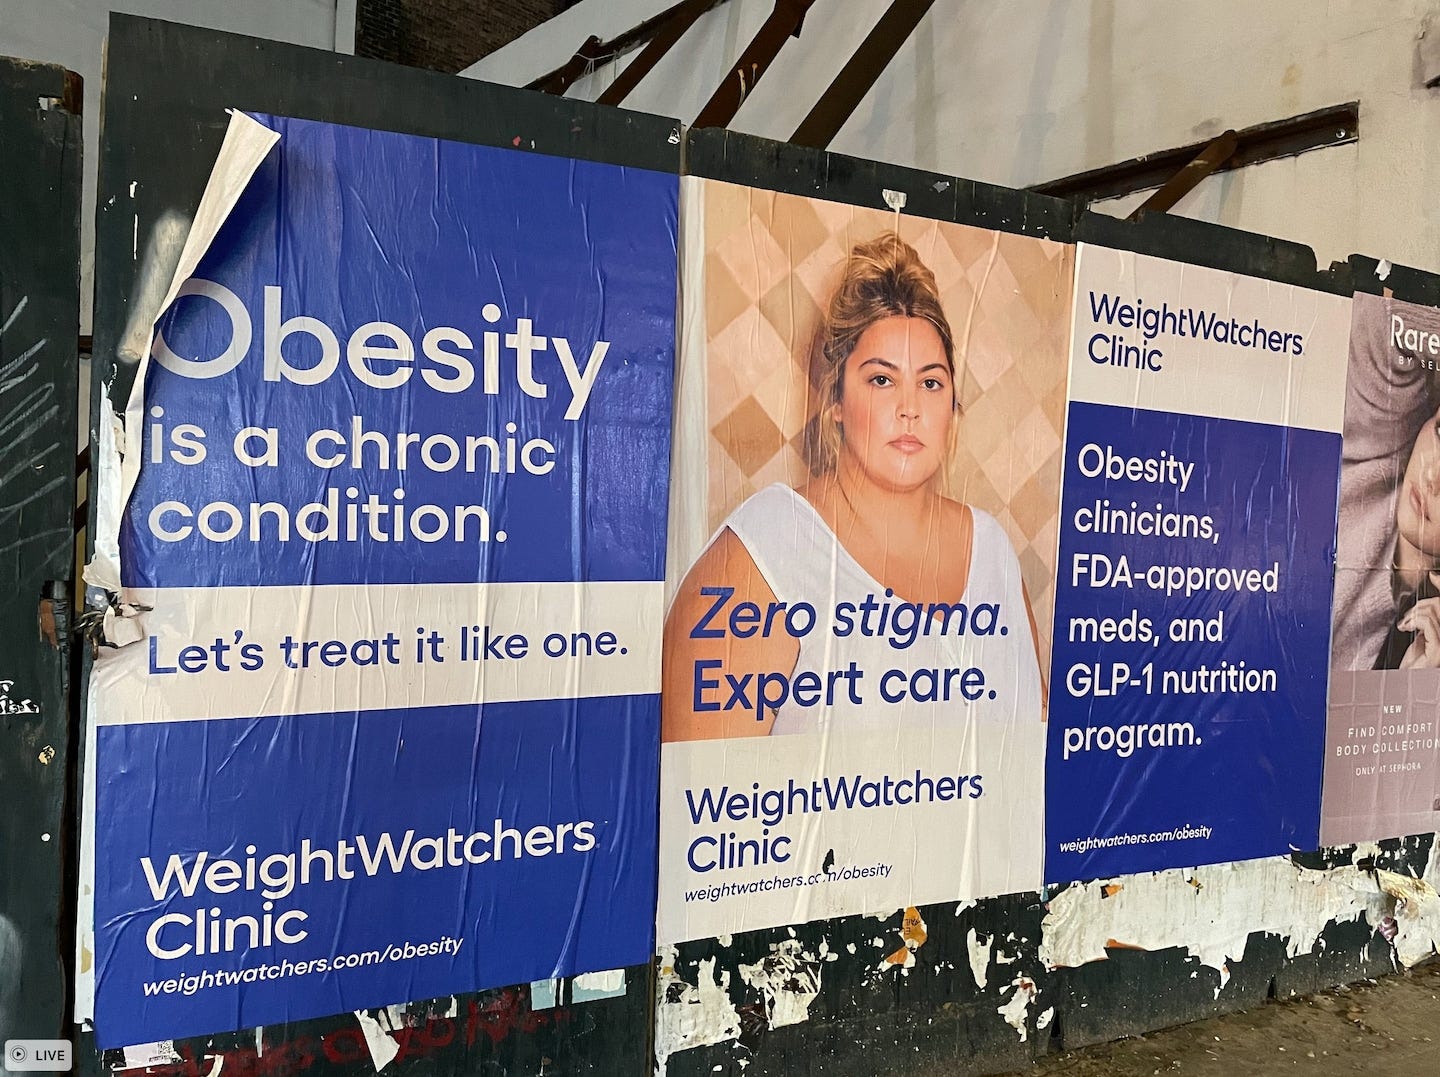 WeightWatchers Clinic advertisement poster on a wall in Manhattan